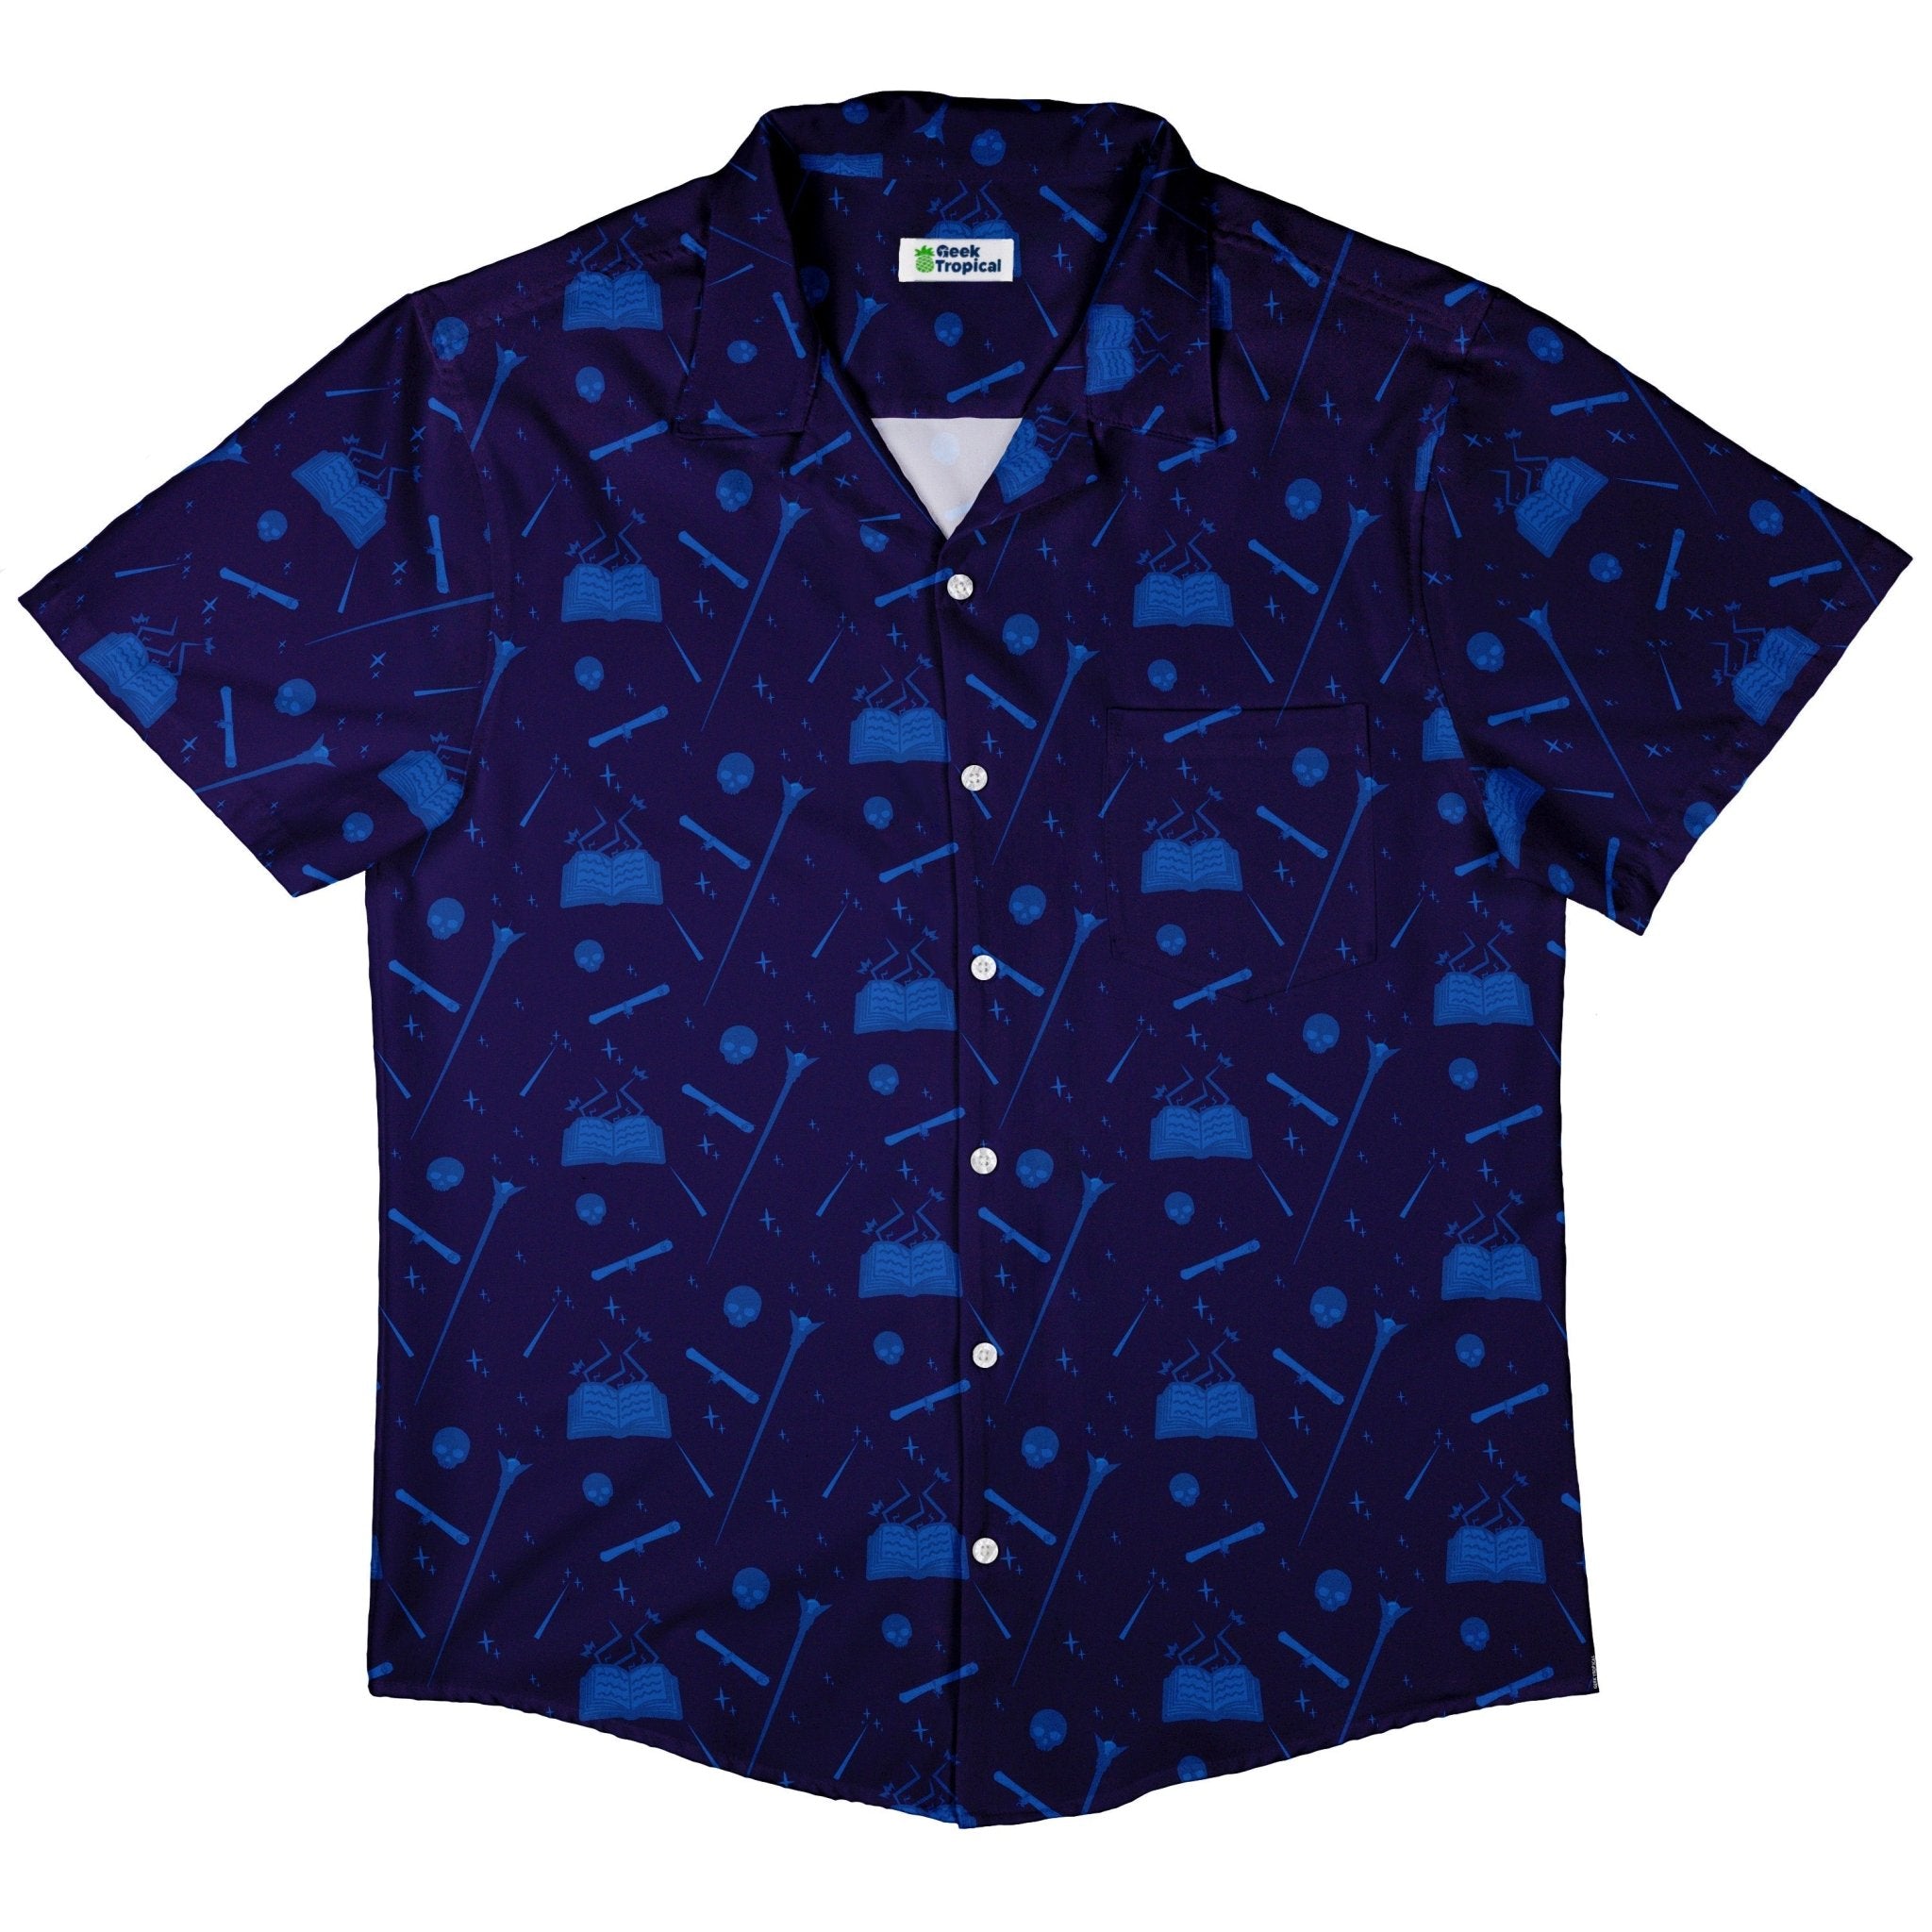 Dnd Wizard Class Button Up Shirt - adult sizing - Design by Heather Davenport - dnd & rpg print